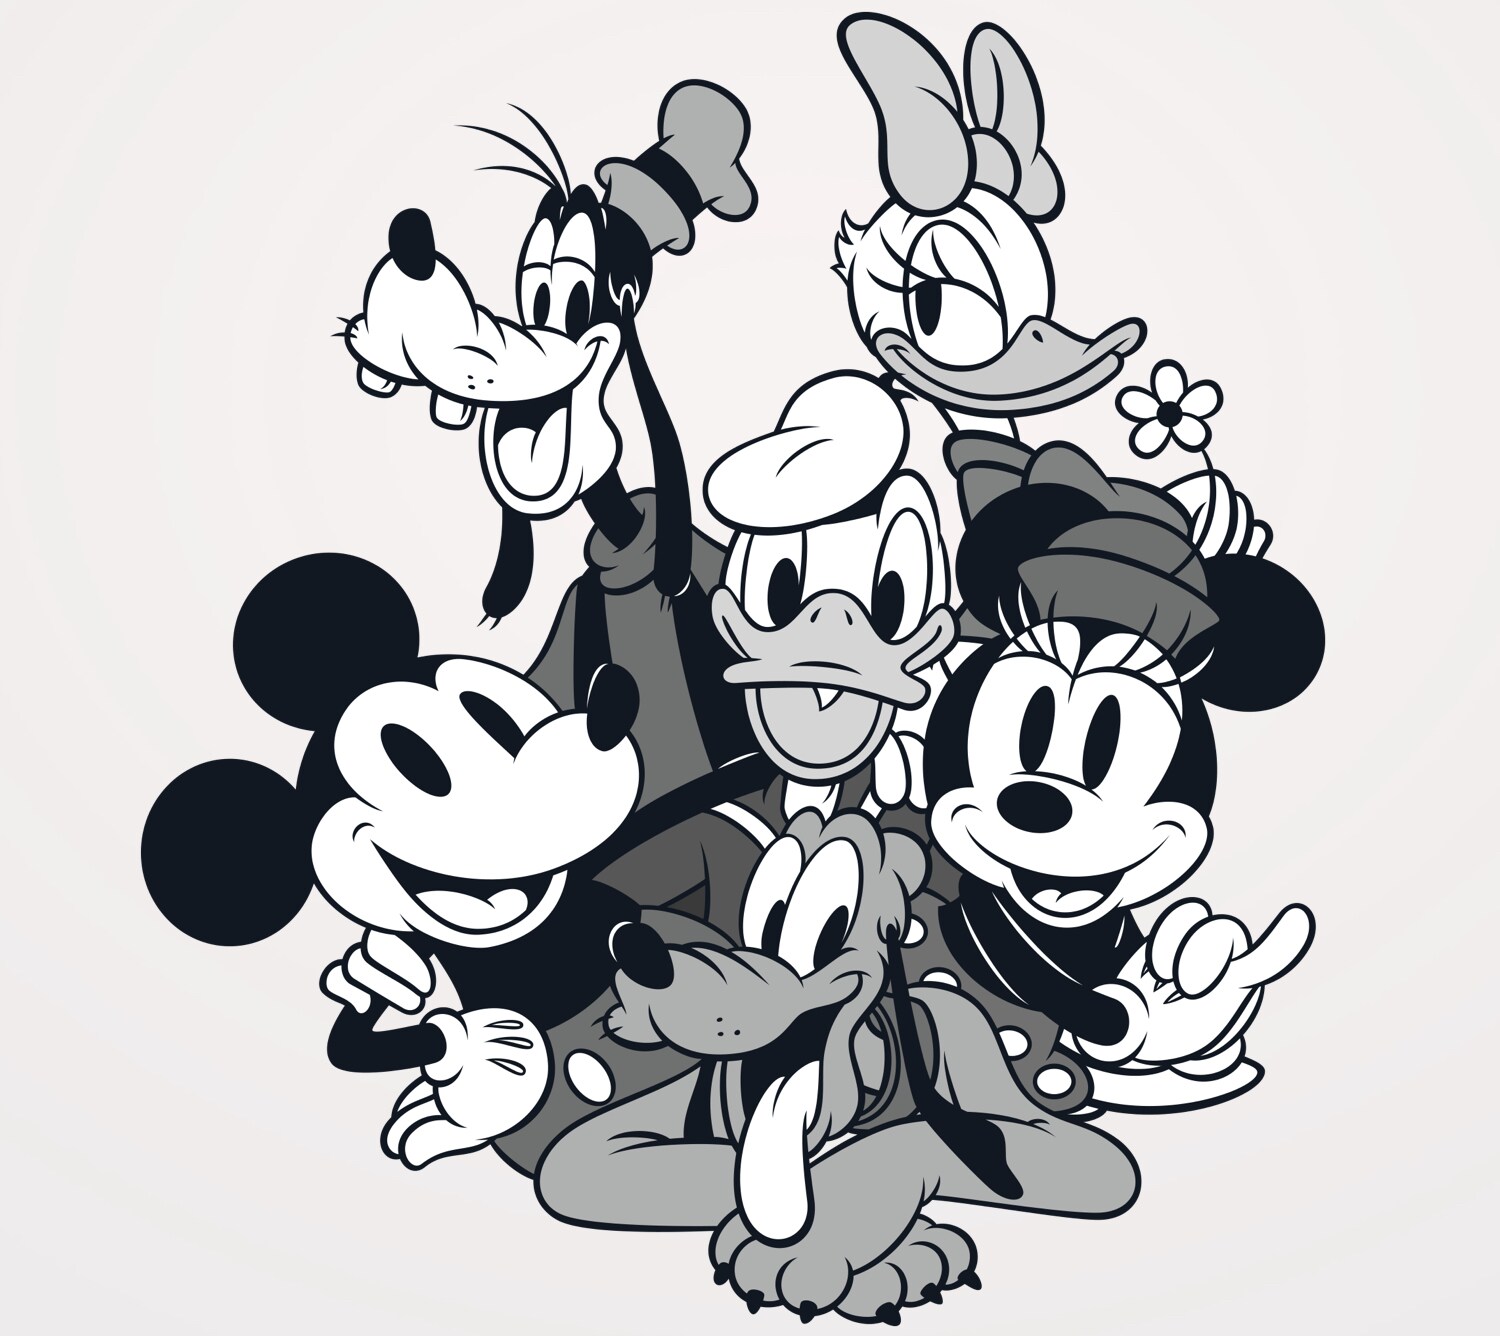 Disney Mickey Mouse 